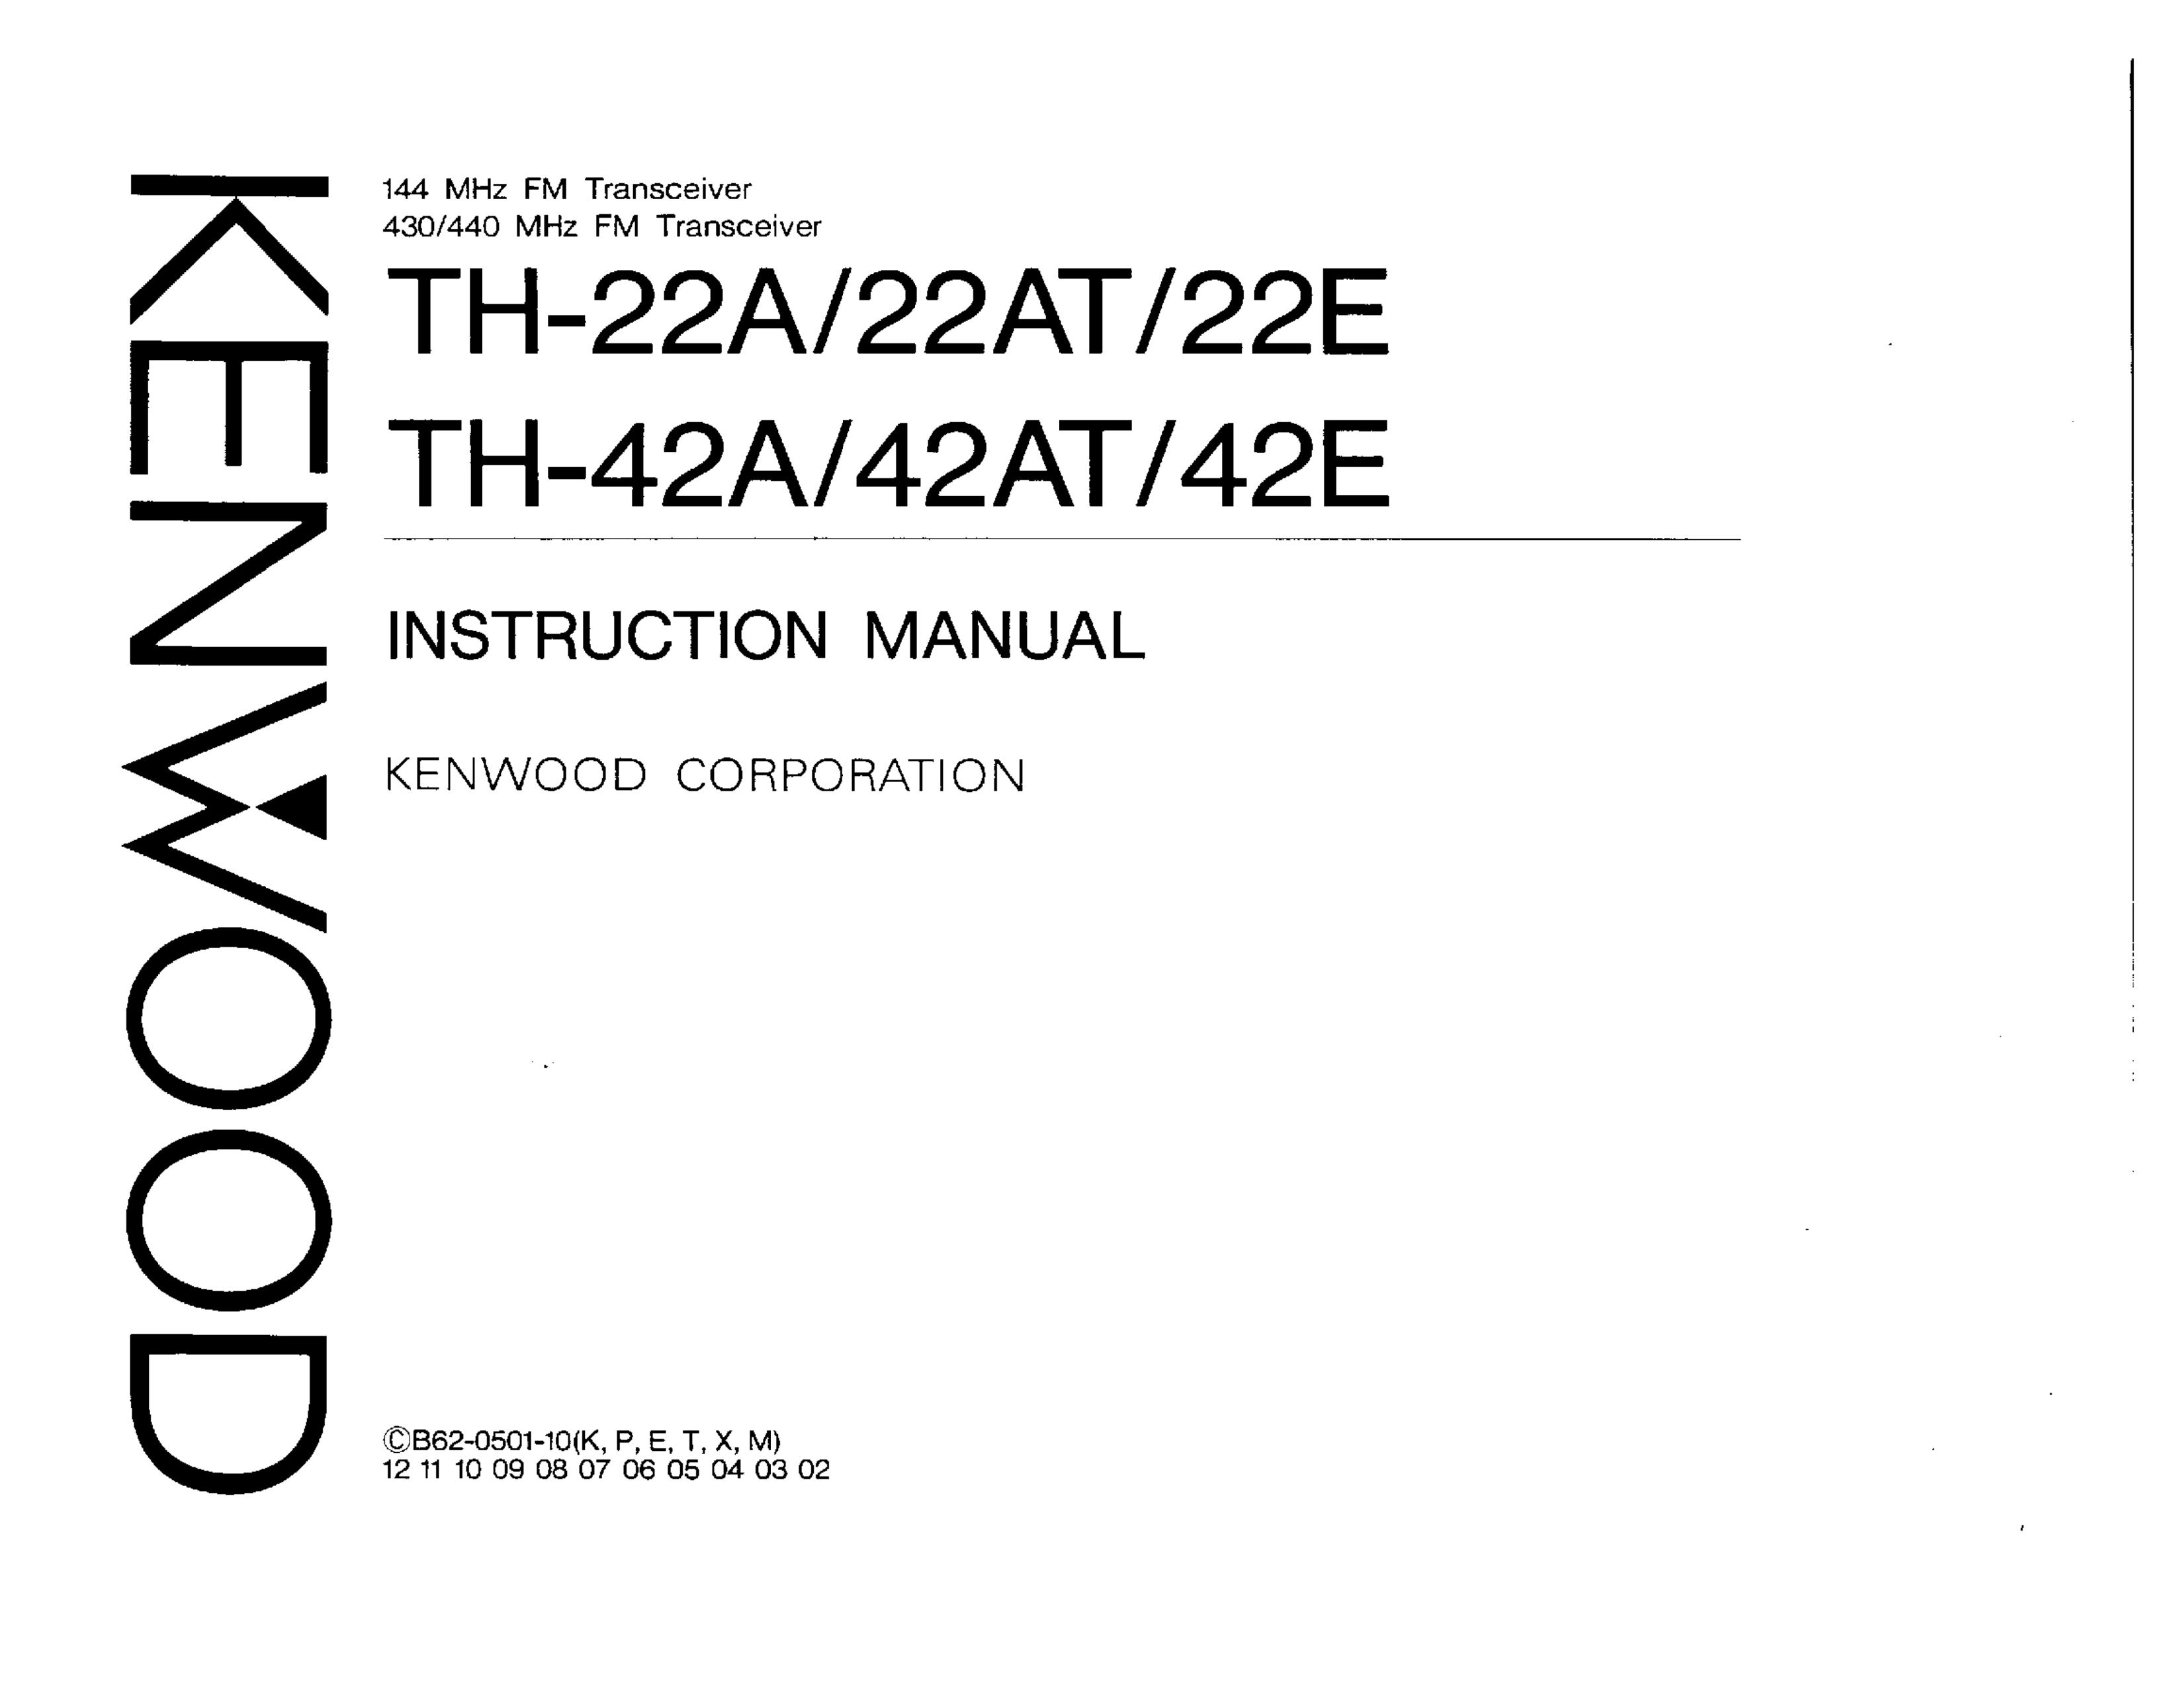 Kenwood TH-42A/42AT/42E Marine Radio User Manual